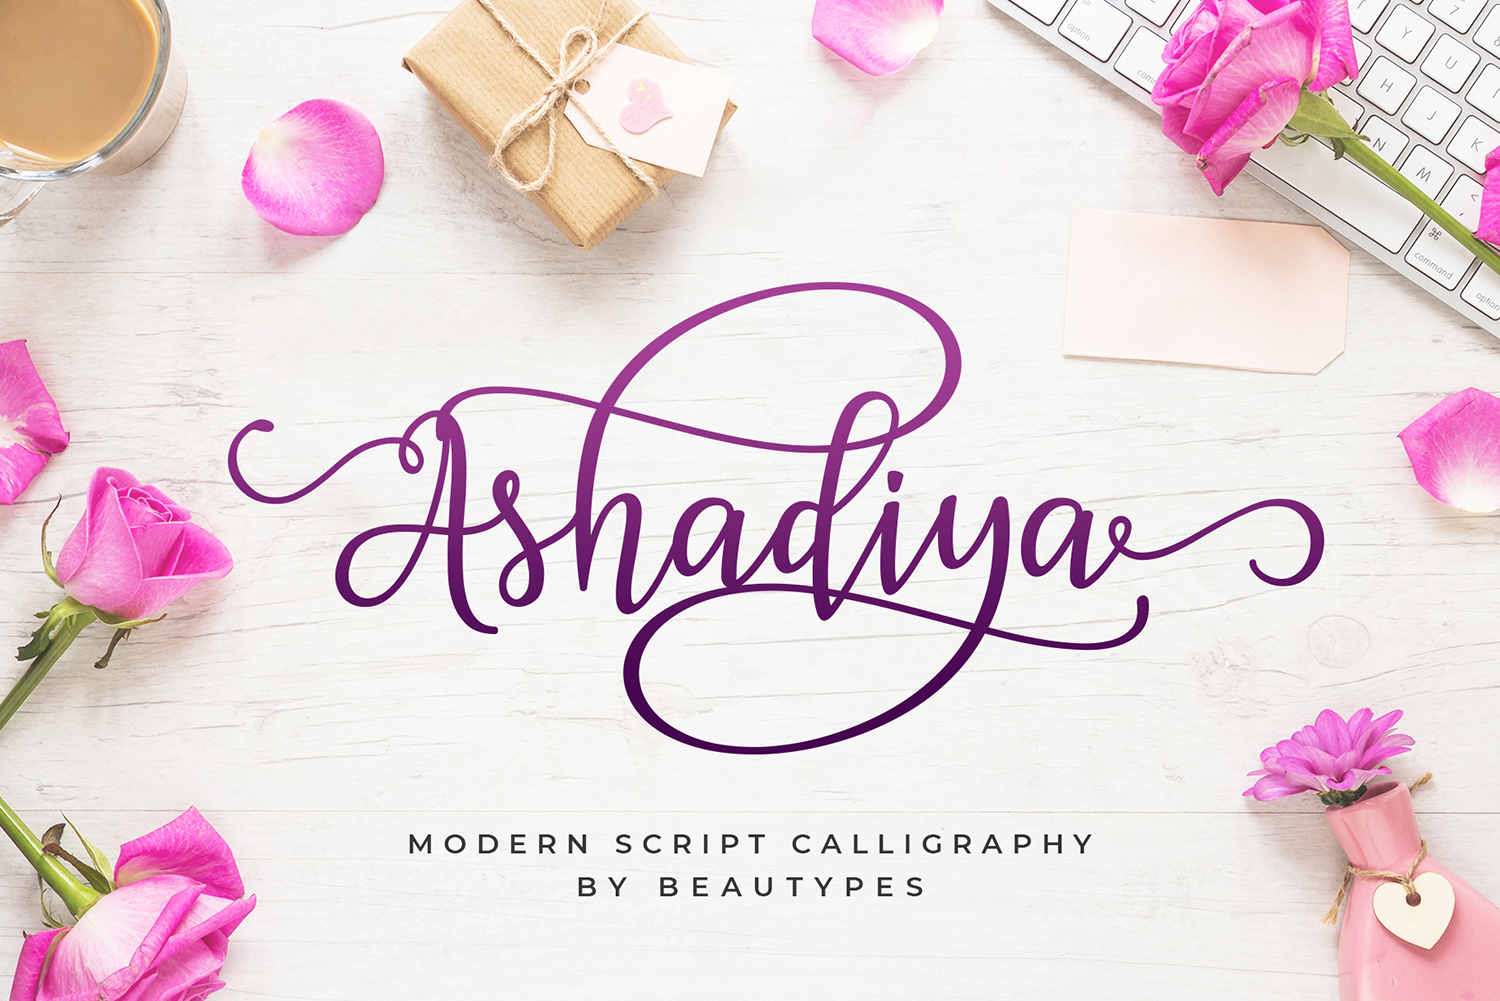 Ashadiya Free Font